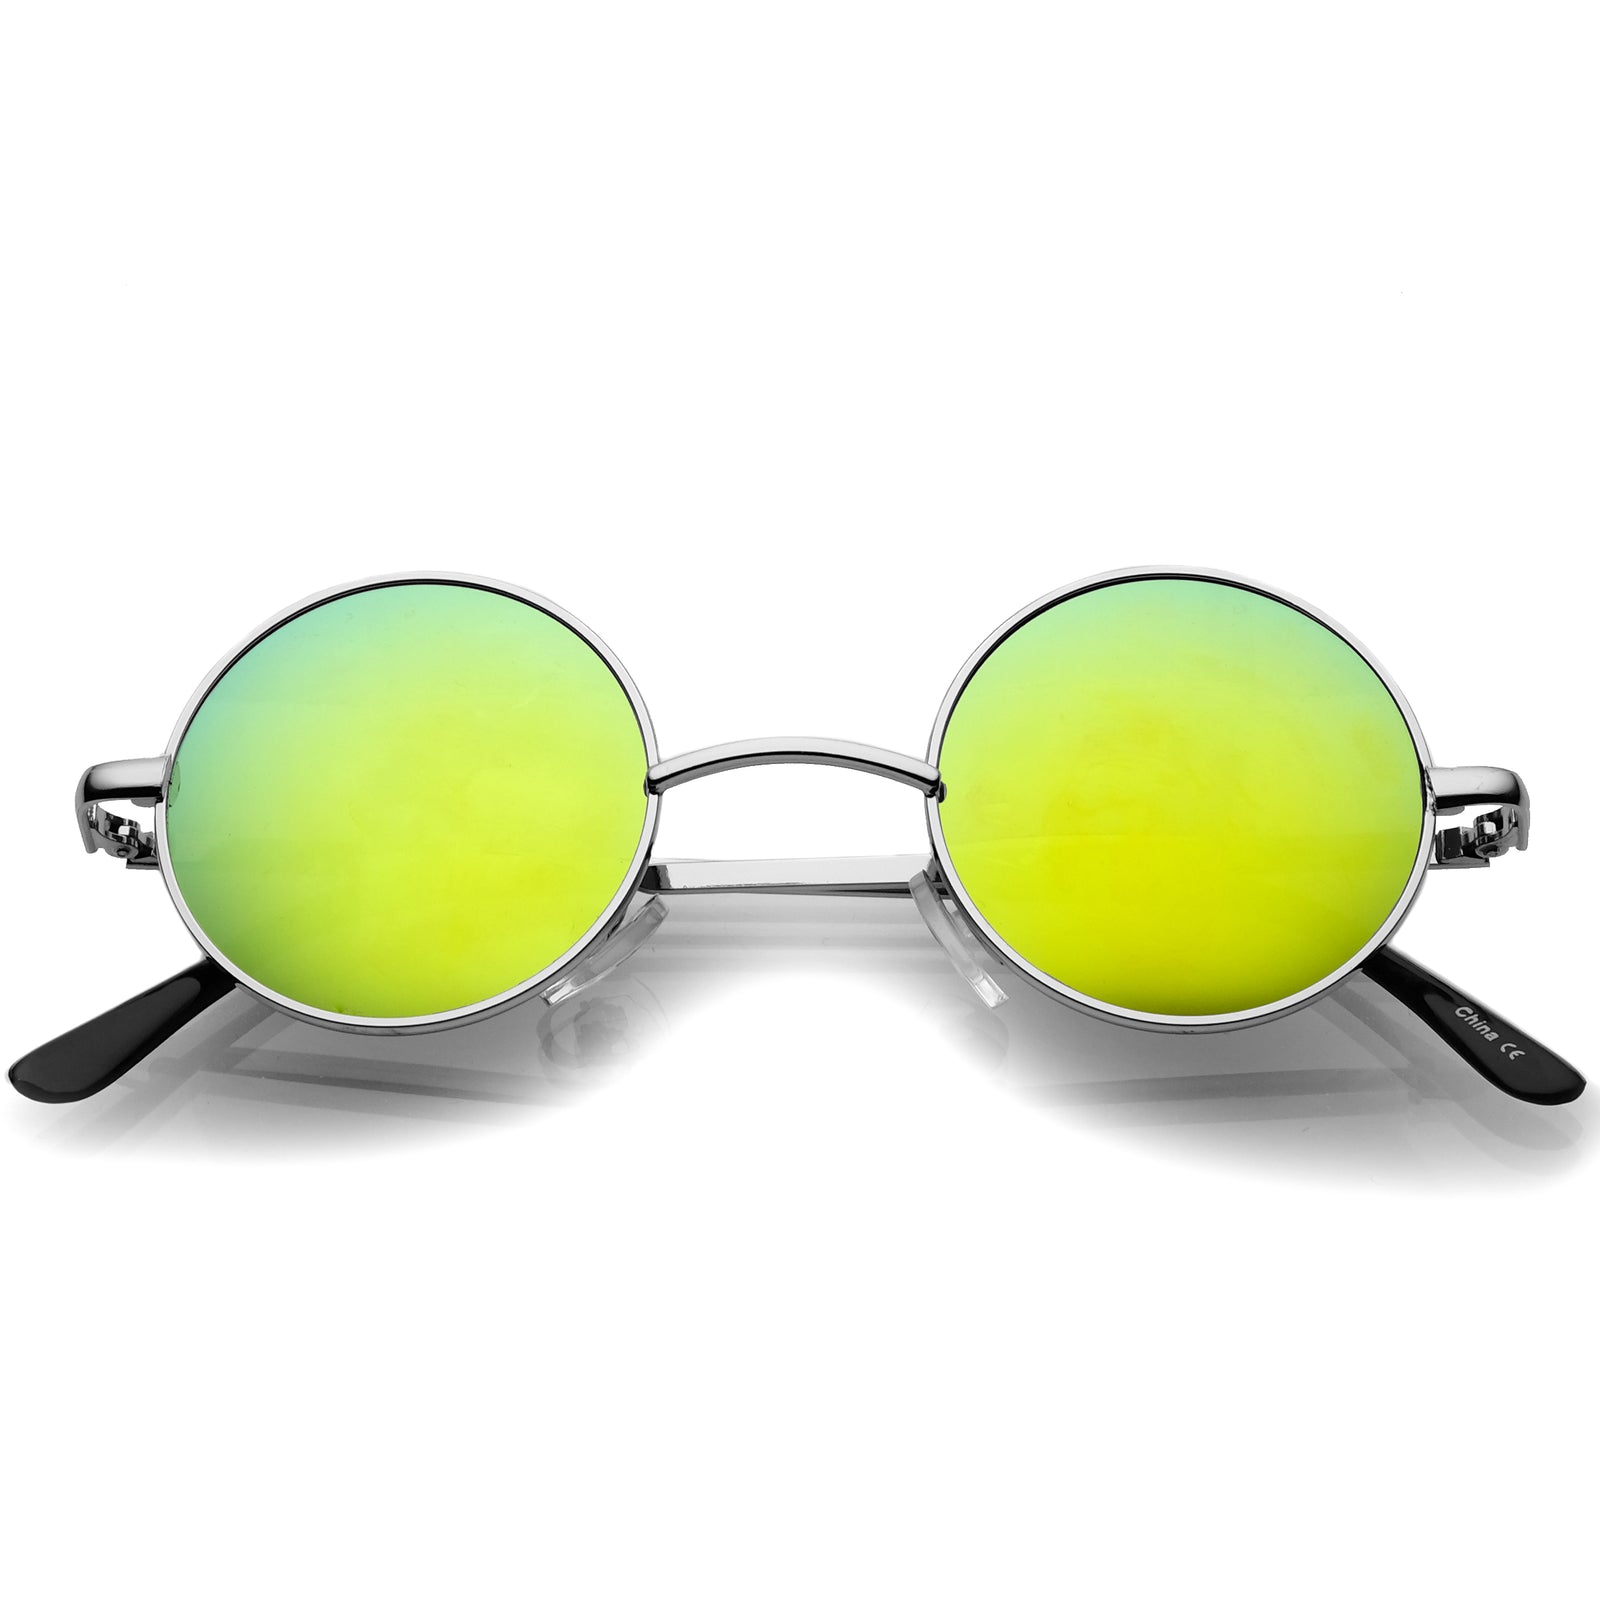 Ray Ban Round Metal RB3447 002/4O mirrored sunglasses - Otticamauro.biz